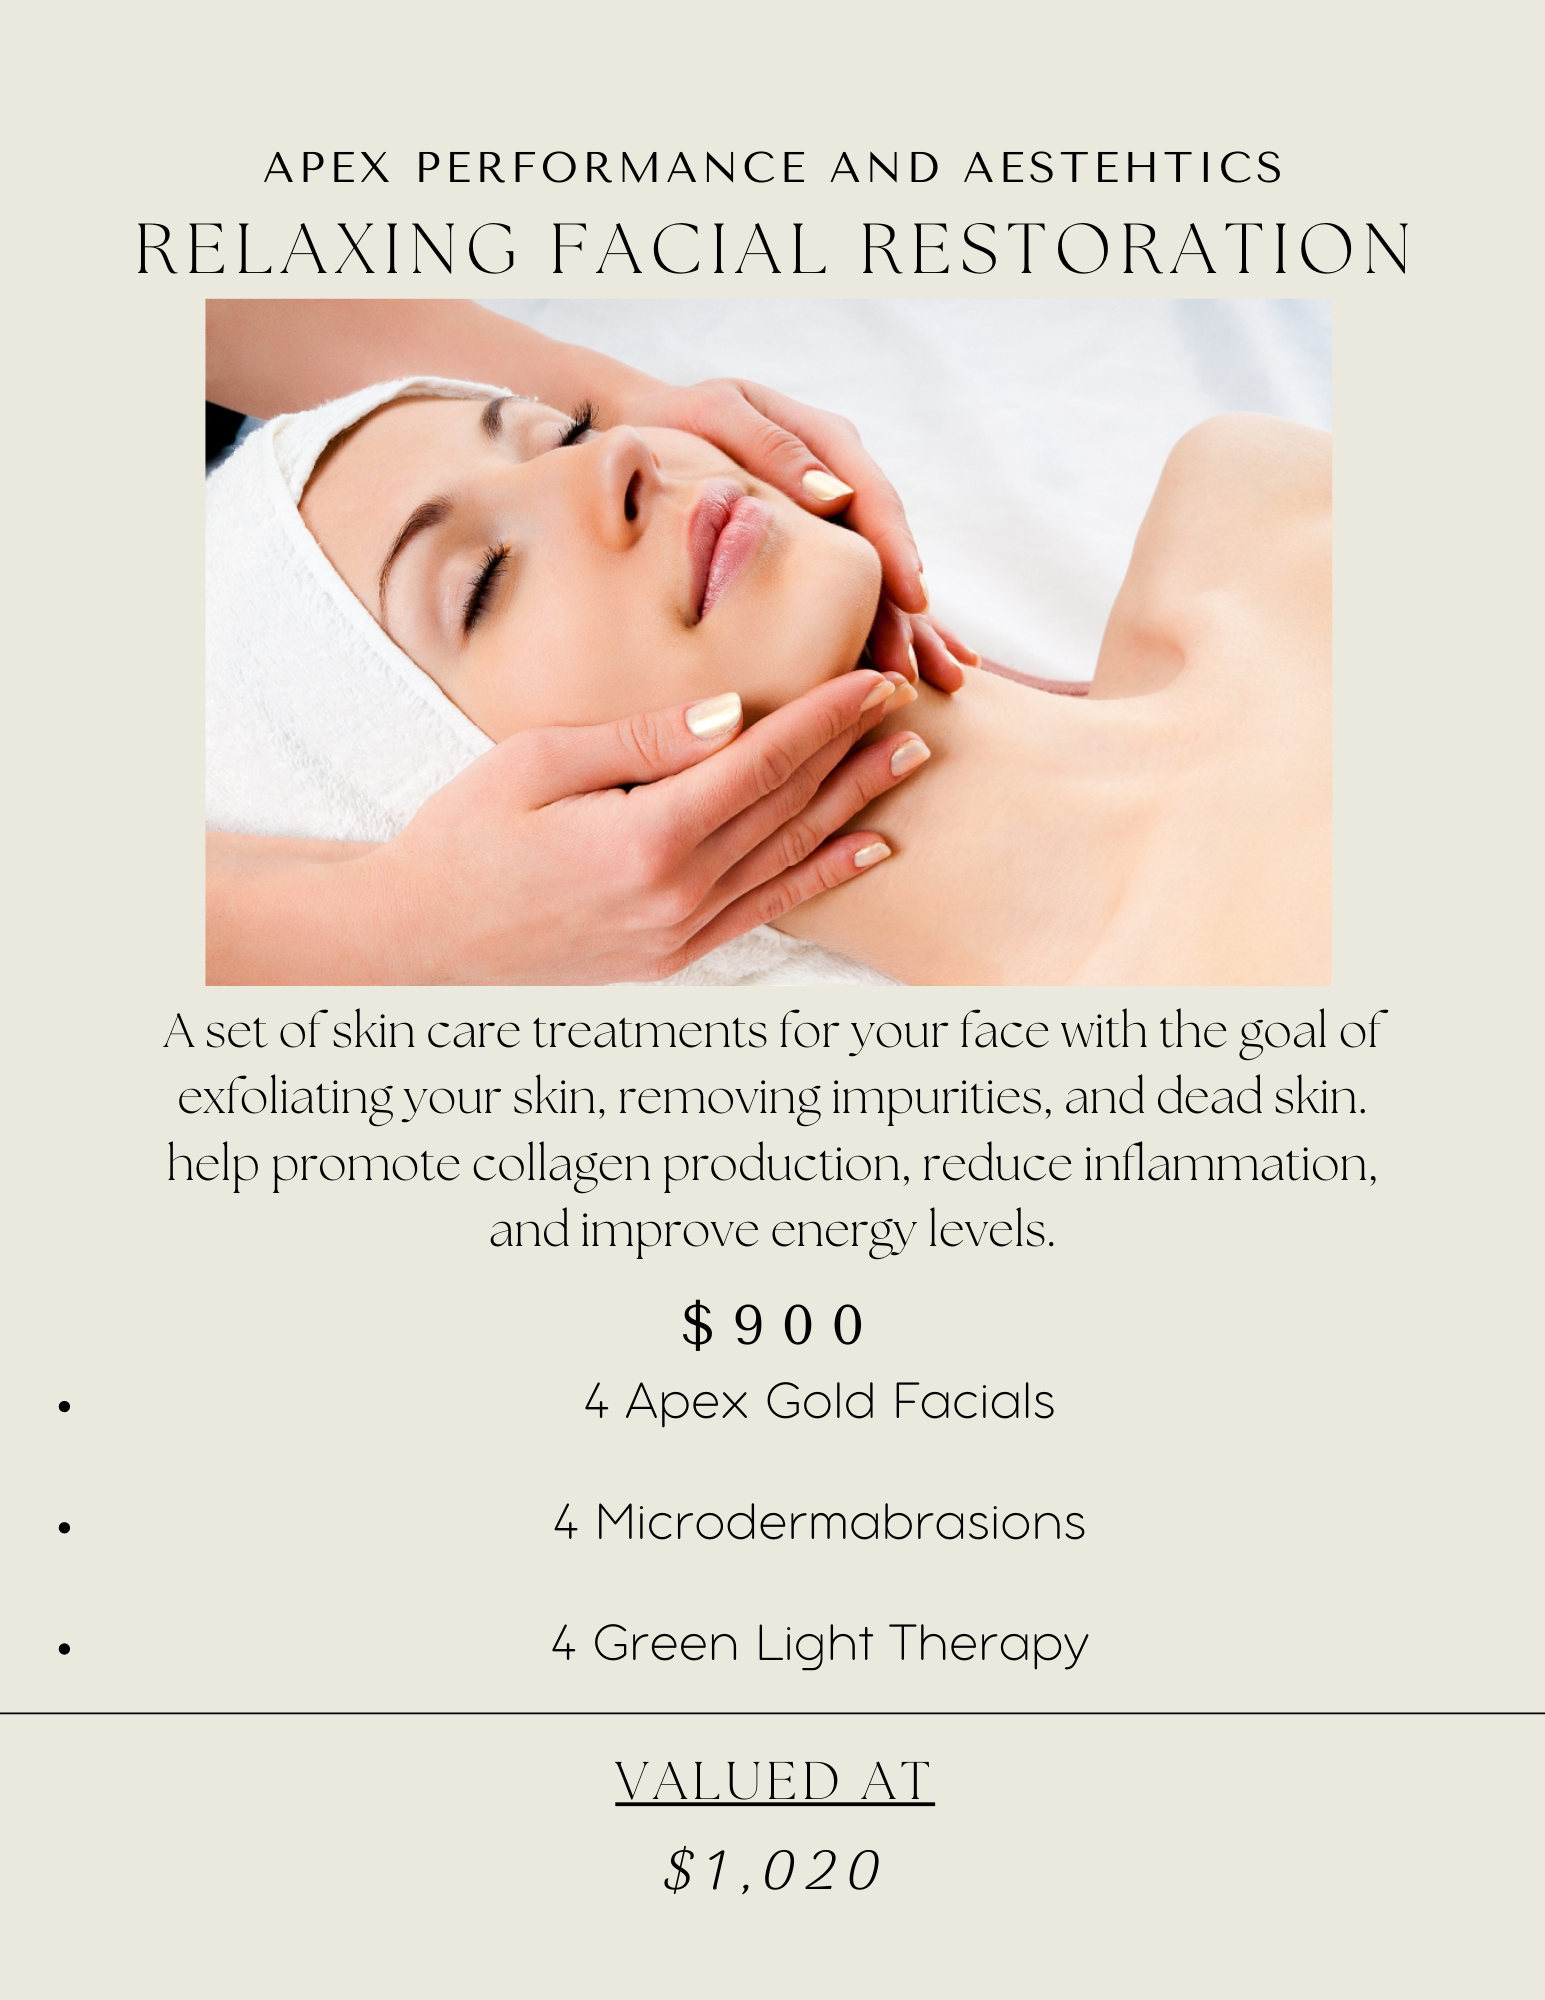 Relaxing Facial Restoration - Package | APEX Performance & Aesthetics in Sandy, UT